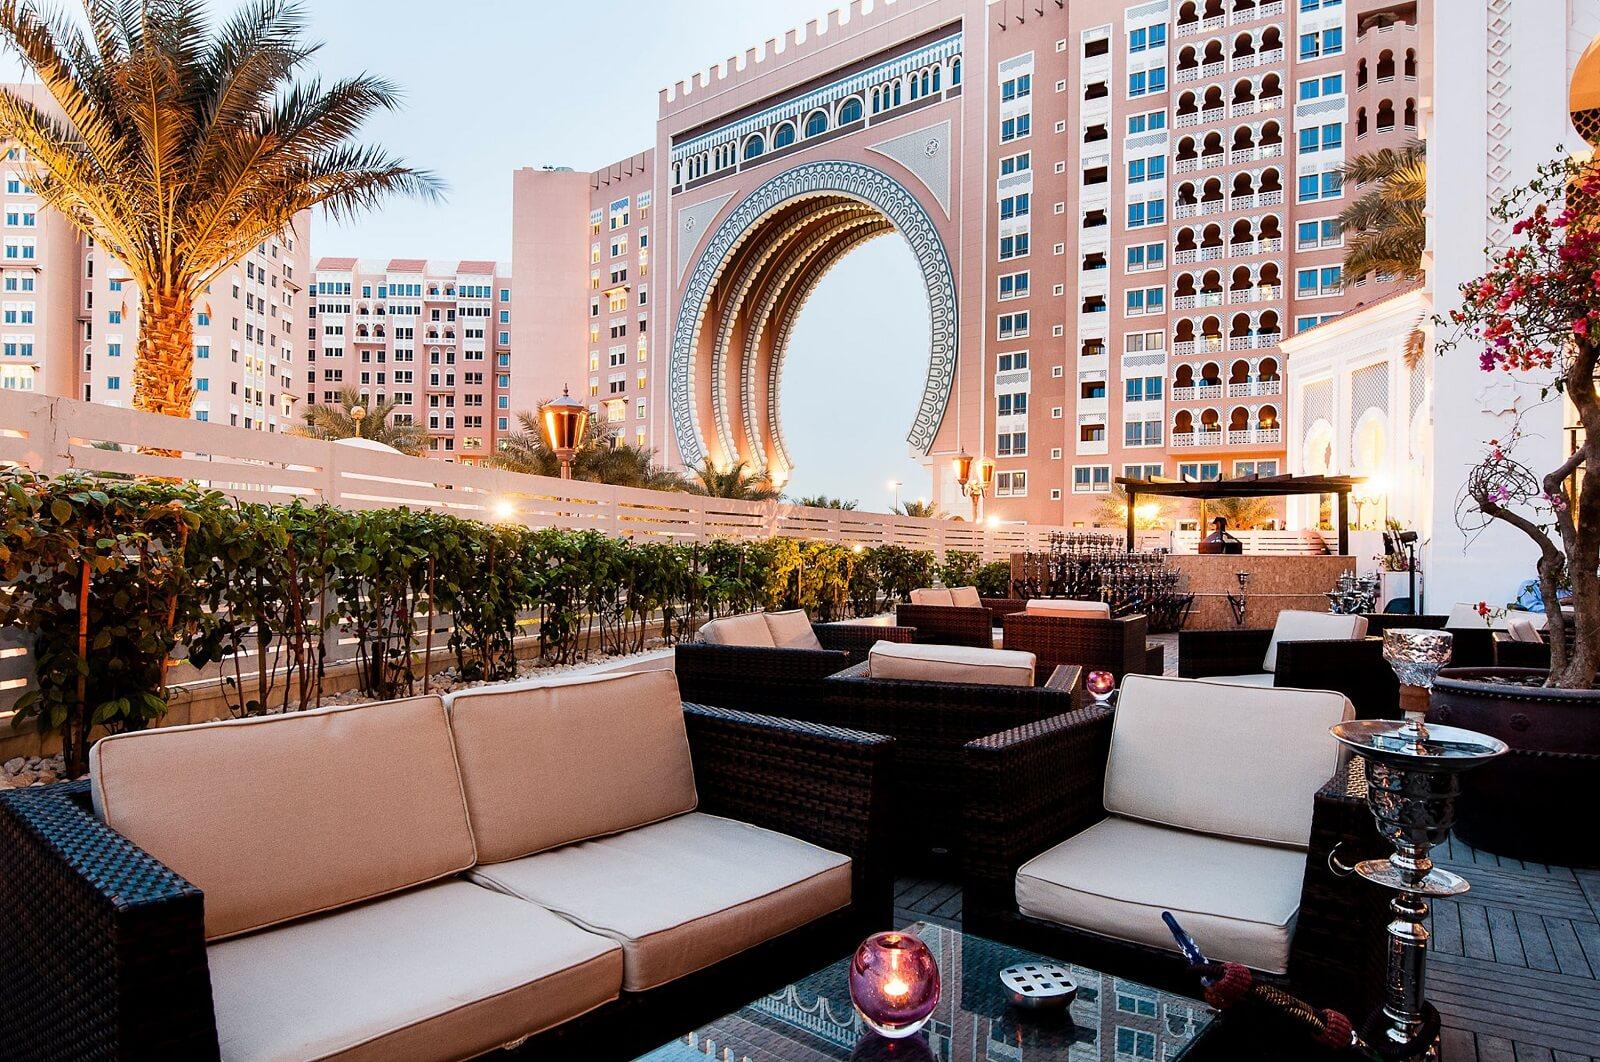 Oaks IBN Battuta Gate Hotel Dubai Executive Club Lounge